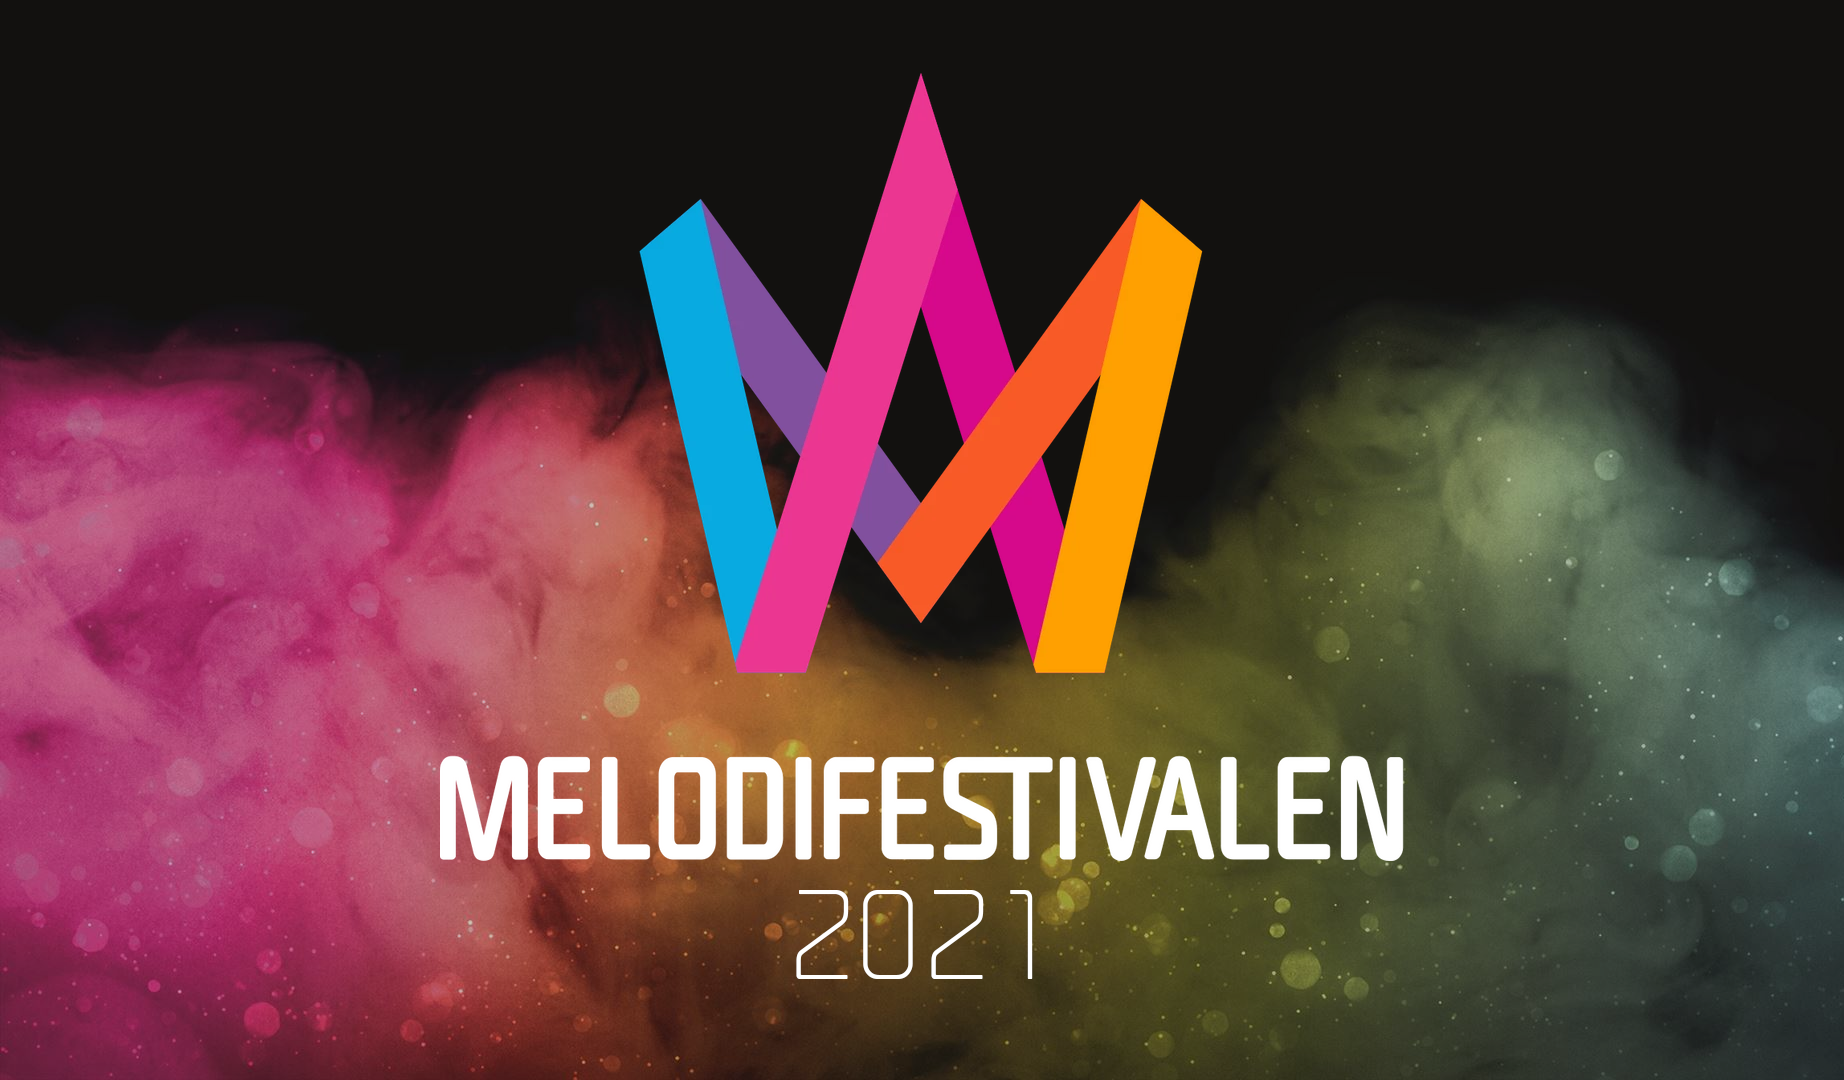 Sweden: SVT reveals the stage design of Melodifestivalen 2021!